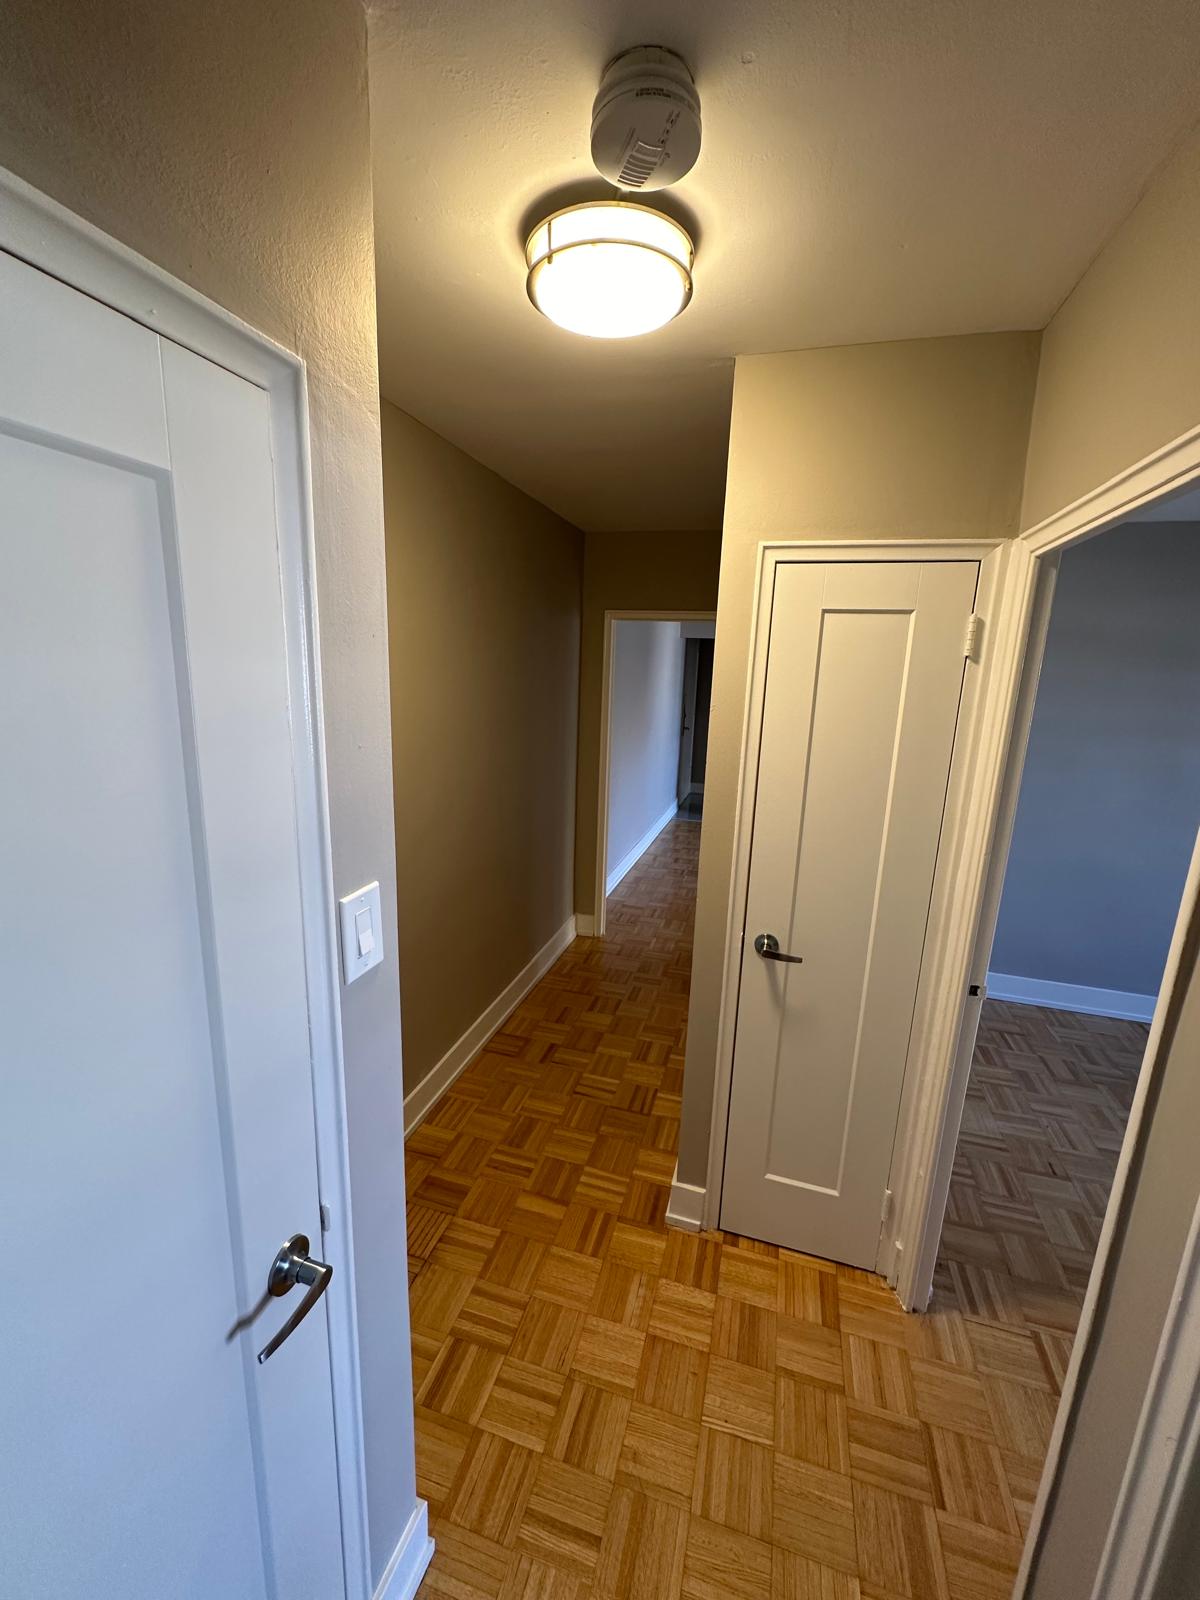 Condo Renovation Picture: Hallway